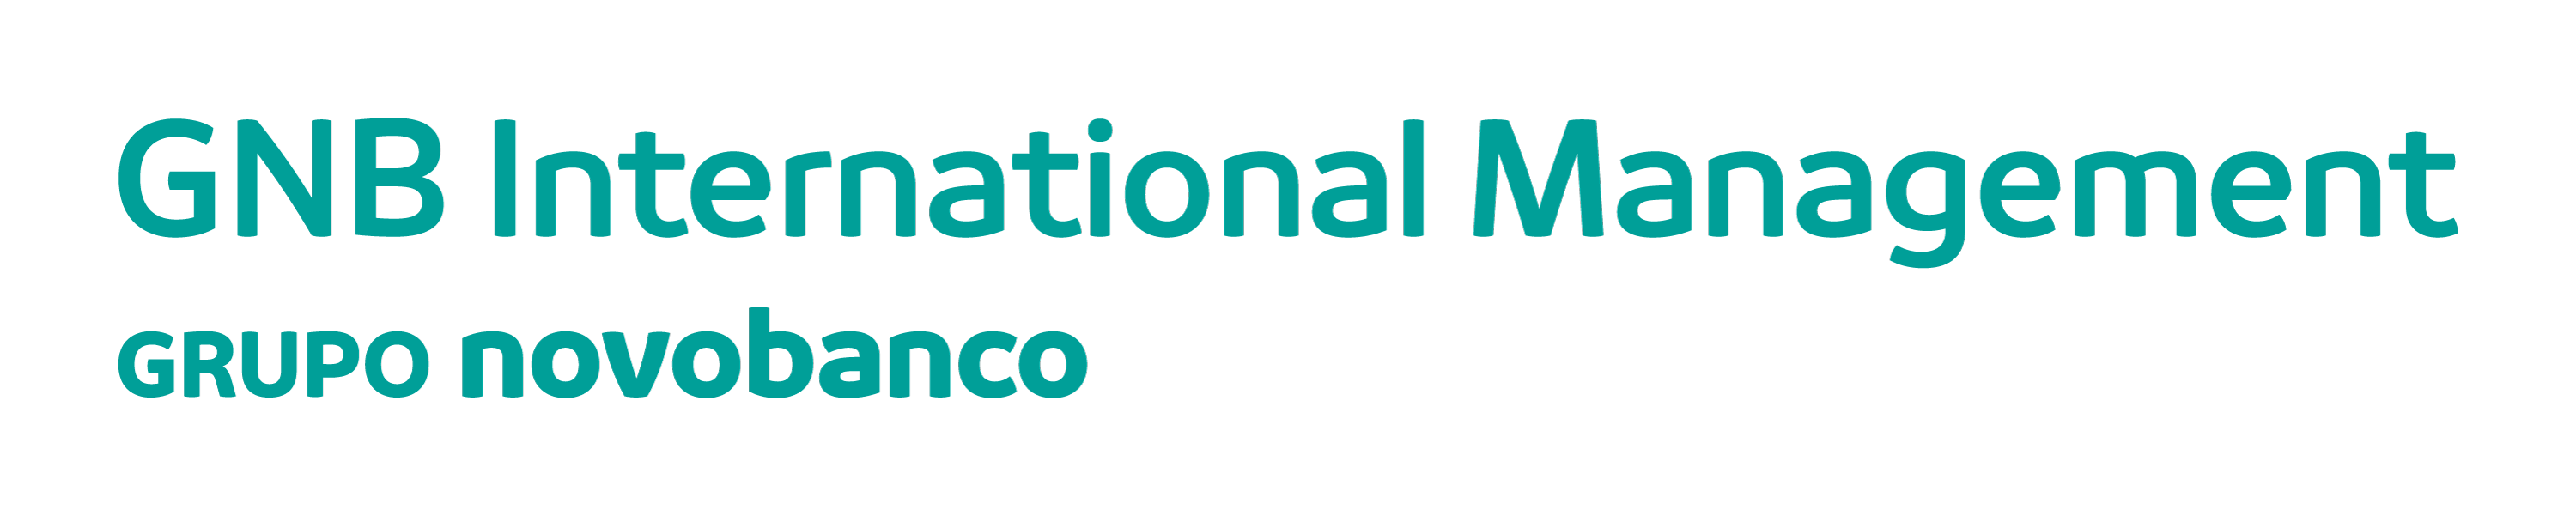 GNB International Management logo